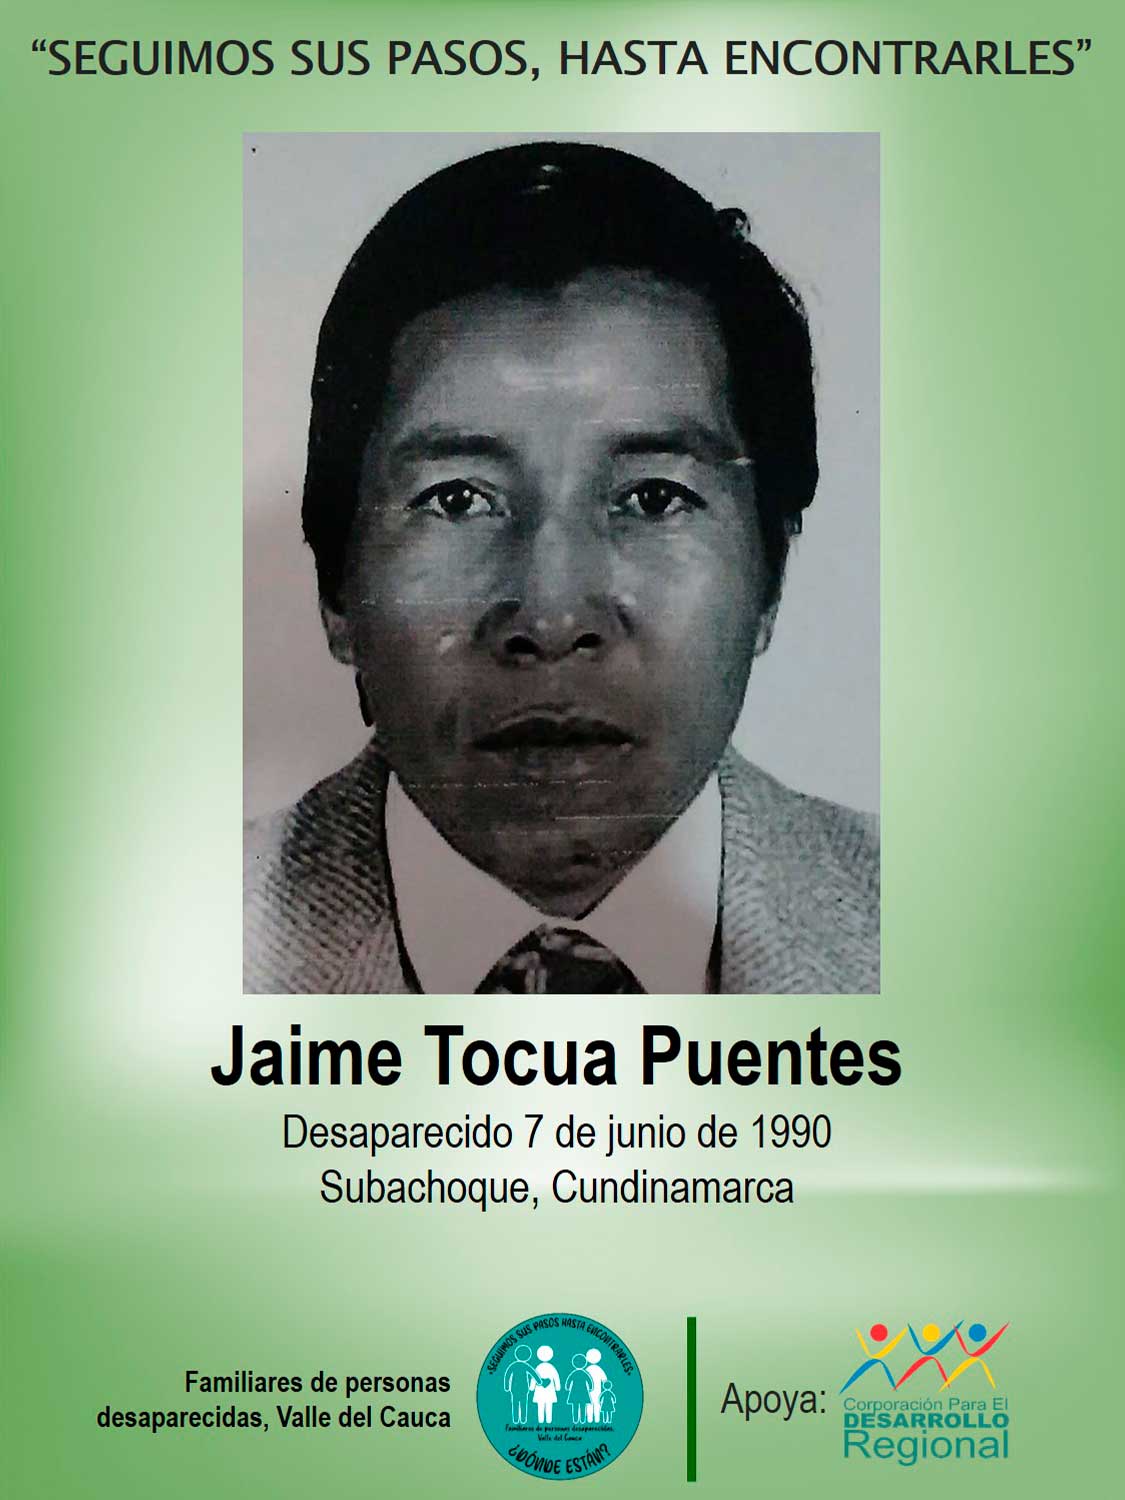 Jaime Tocua Puentes